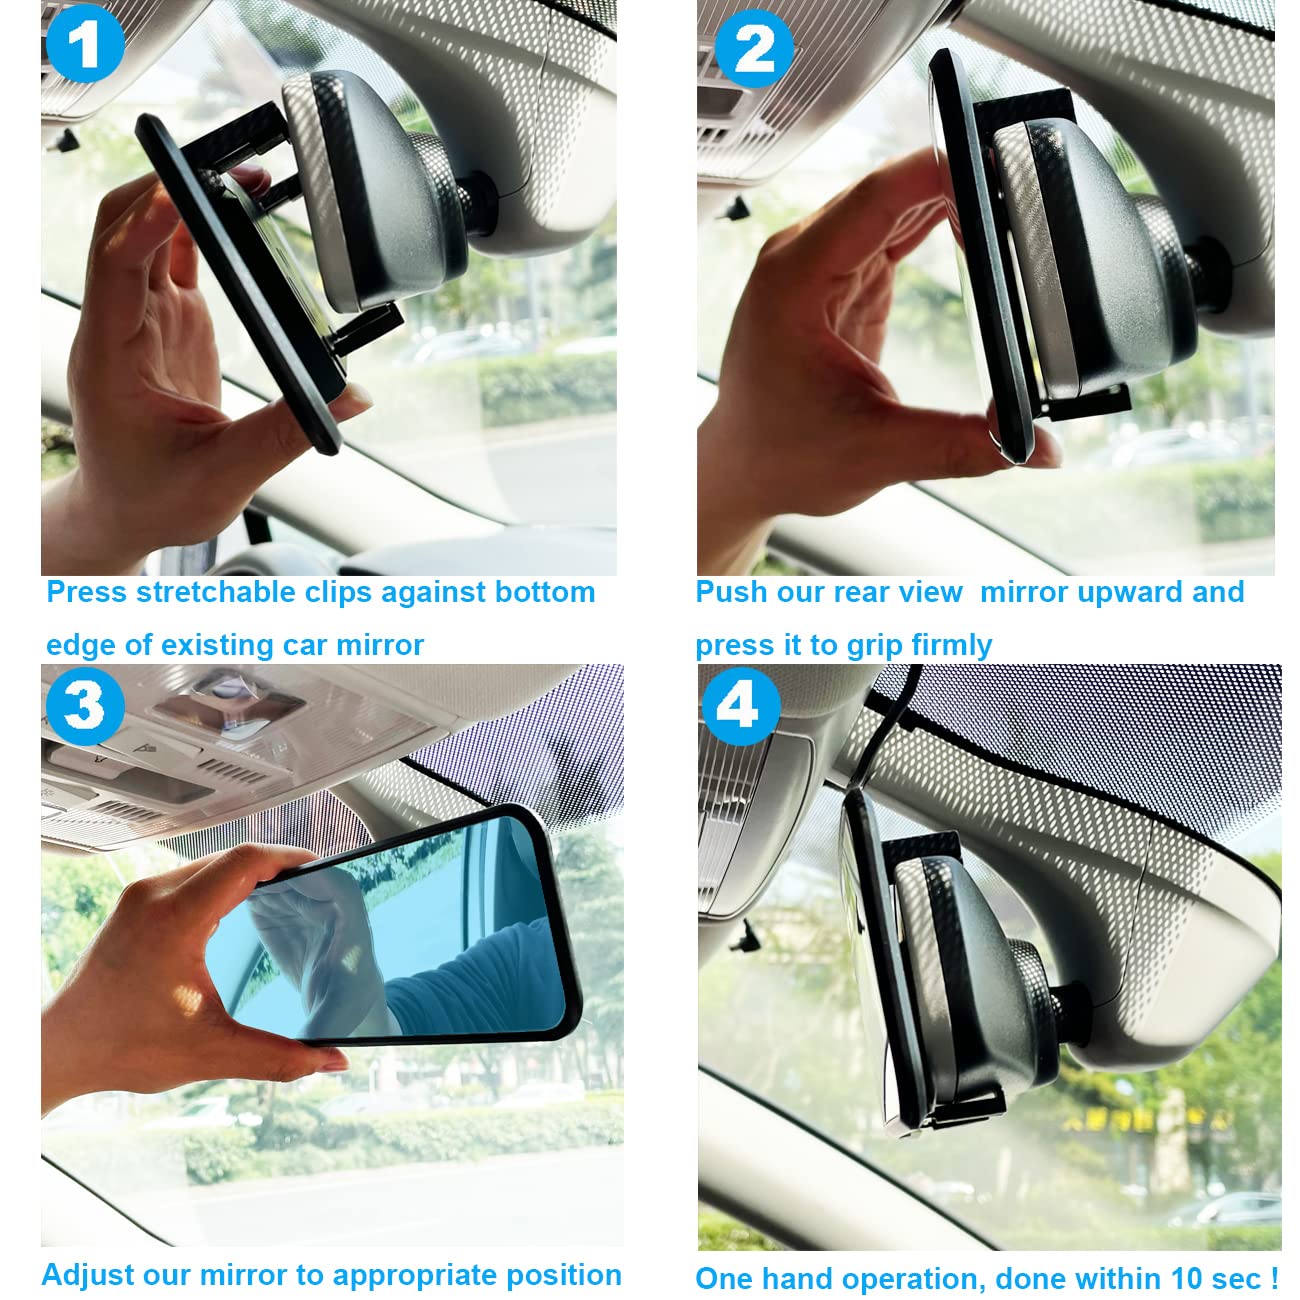 Rear View Mirror, Universal Clip On Rearview Mirror, Wide Angle Mirror, Interior Rear View Mirror, Anti Glare Rearview Mirror, Blue Tint Car Mirror (Bonus 2 PCS Long Blind Spot Mirrors)